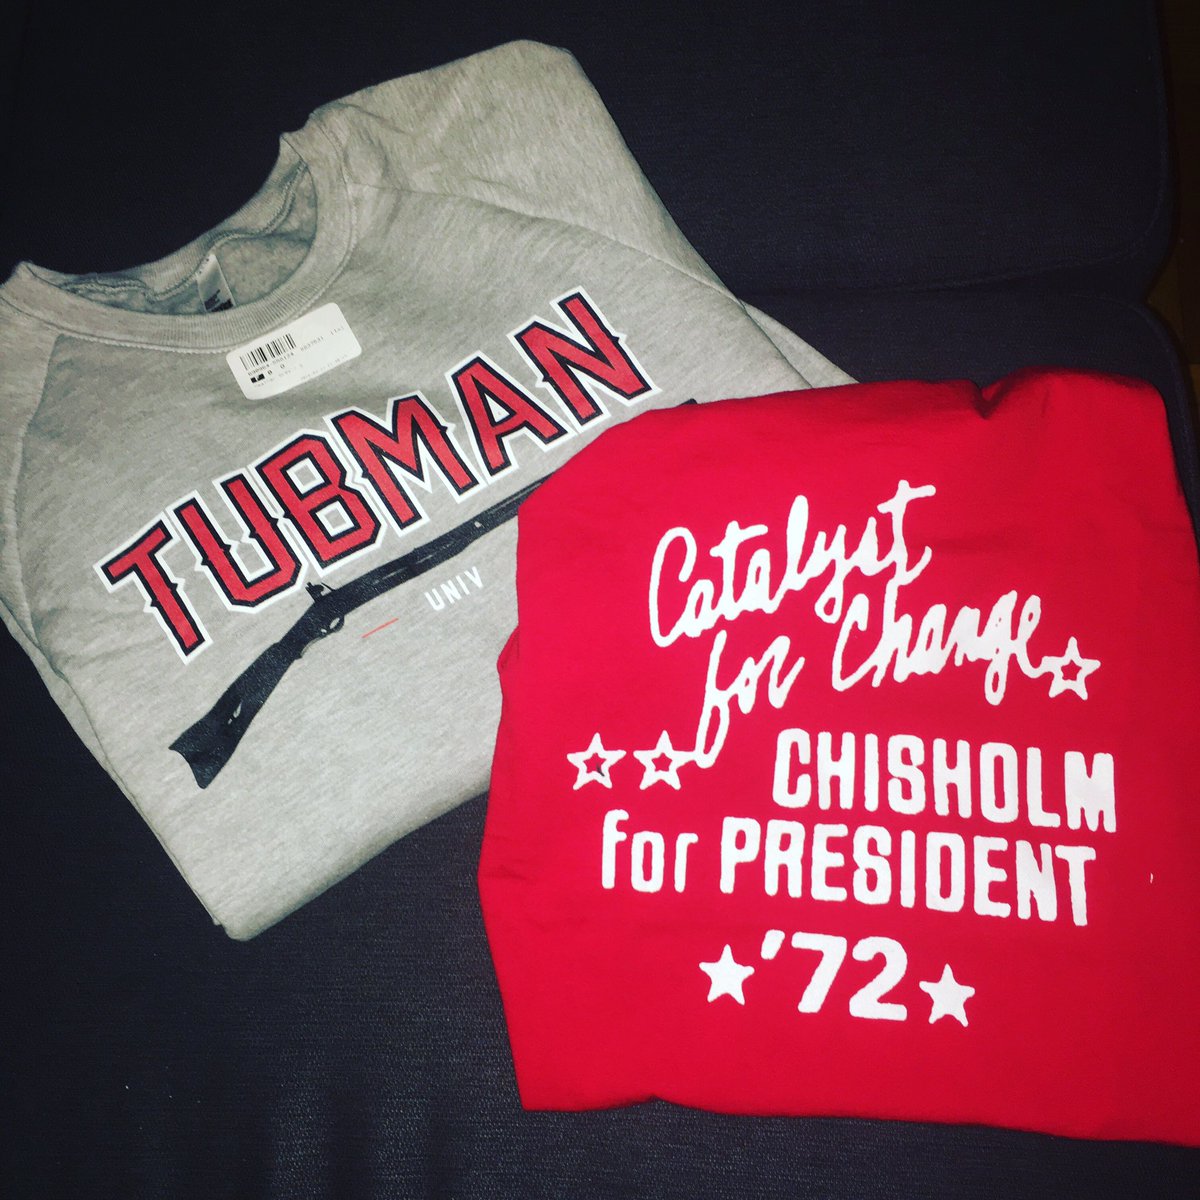 Finally received my @philaprint shirts. #TubmanUniversity & #chisholmforpresident #schoolofthought #tubdubs